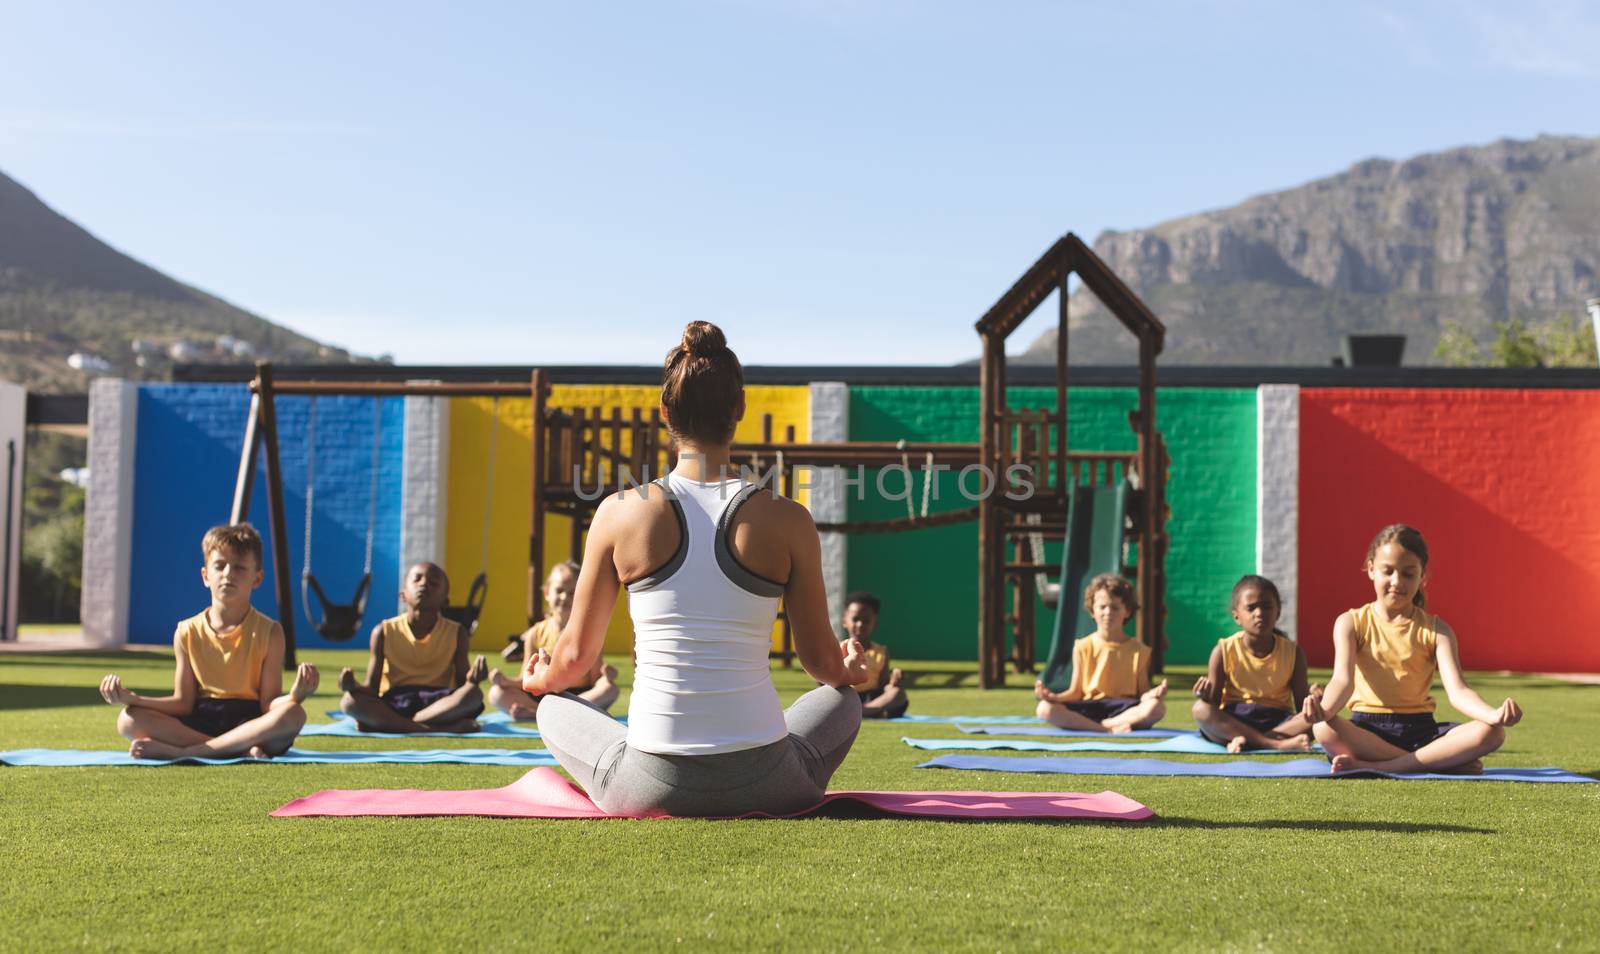 Yoga teacher teaching yoga to students in school playground by Wavebreakmedia